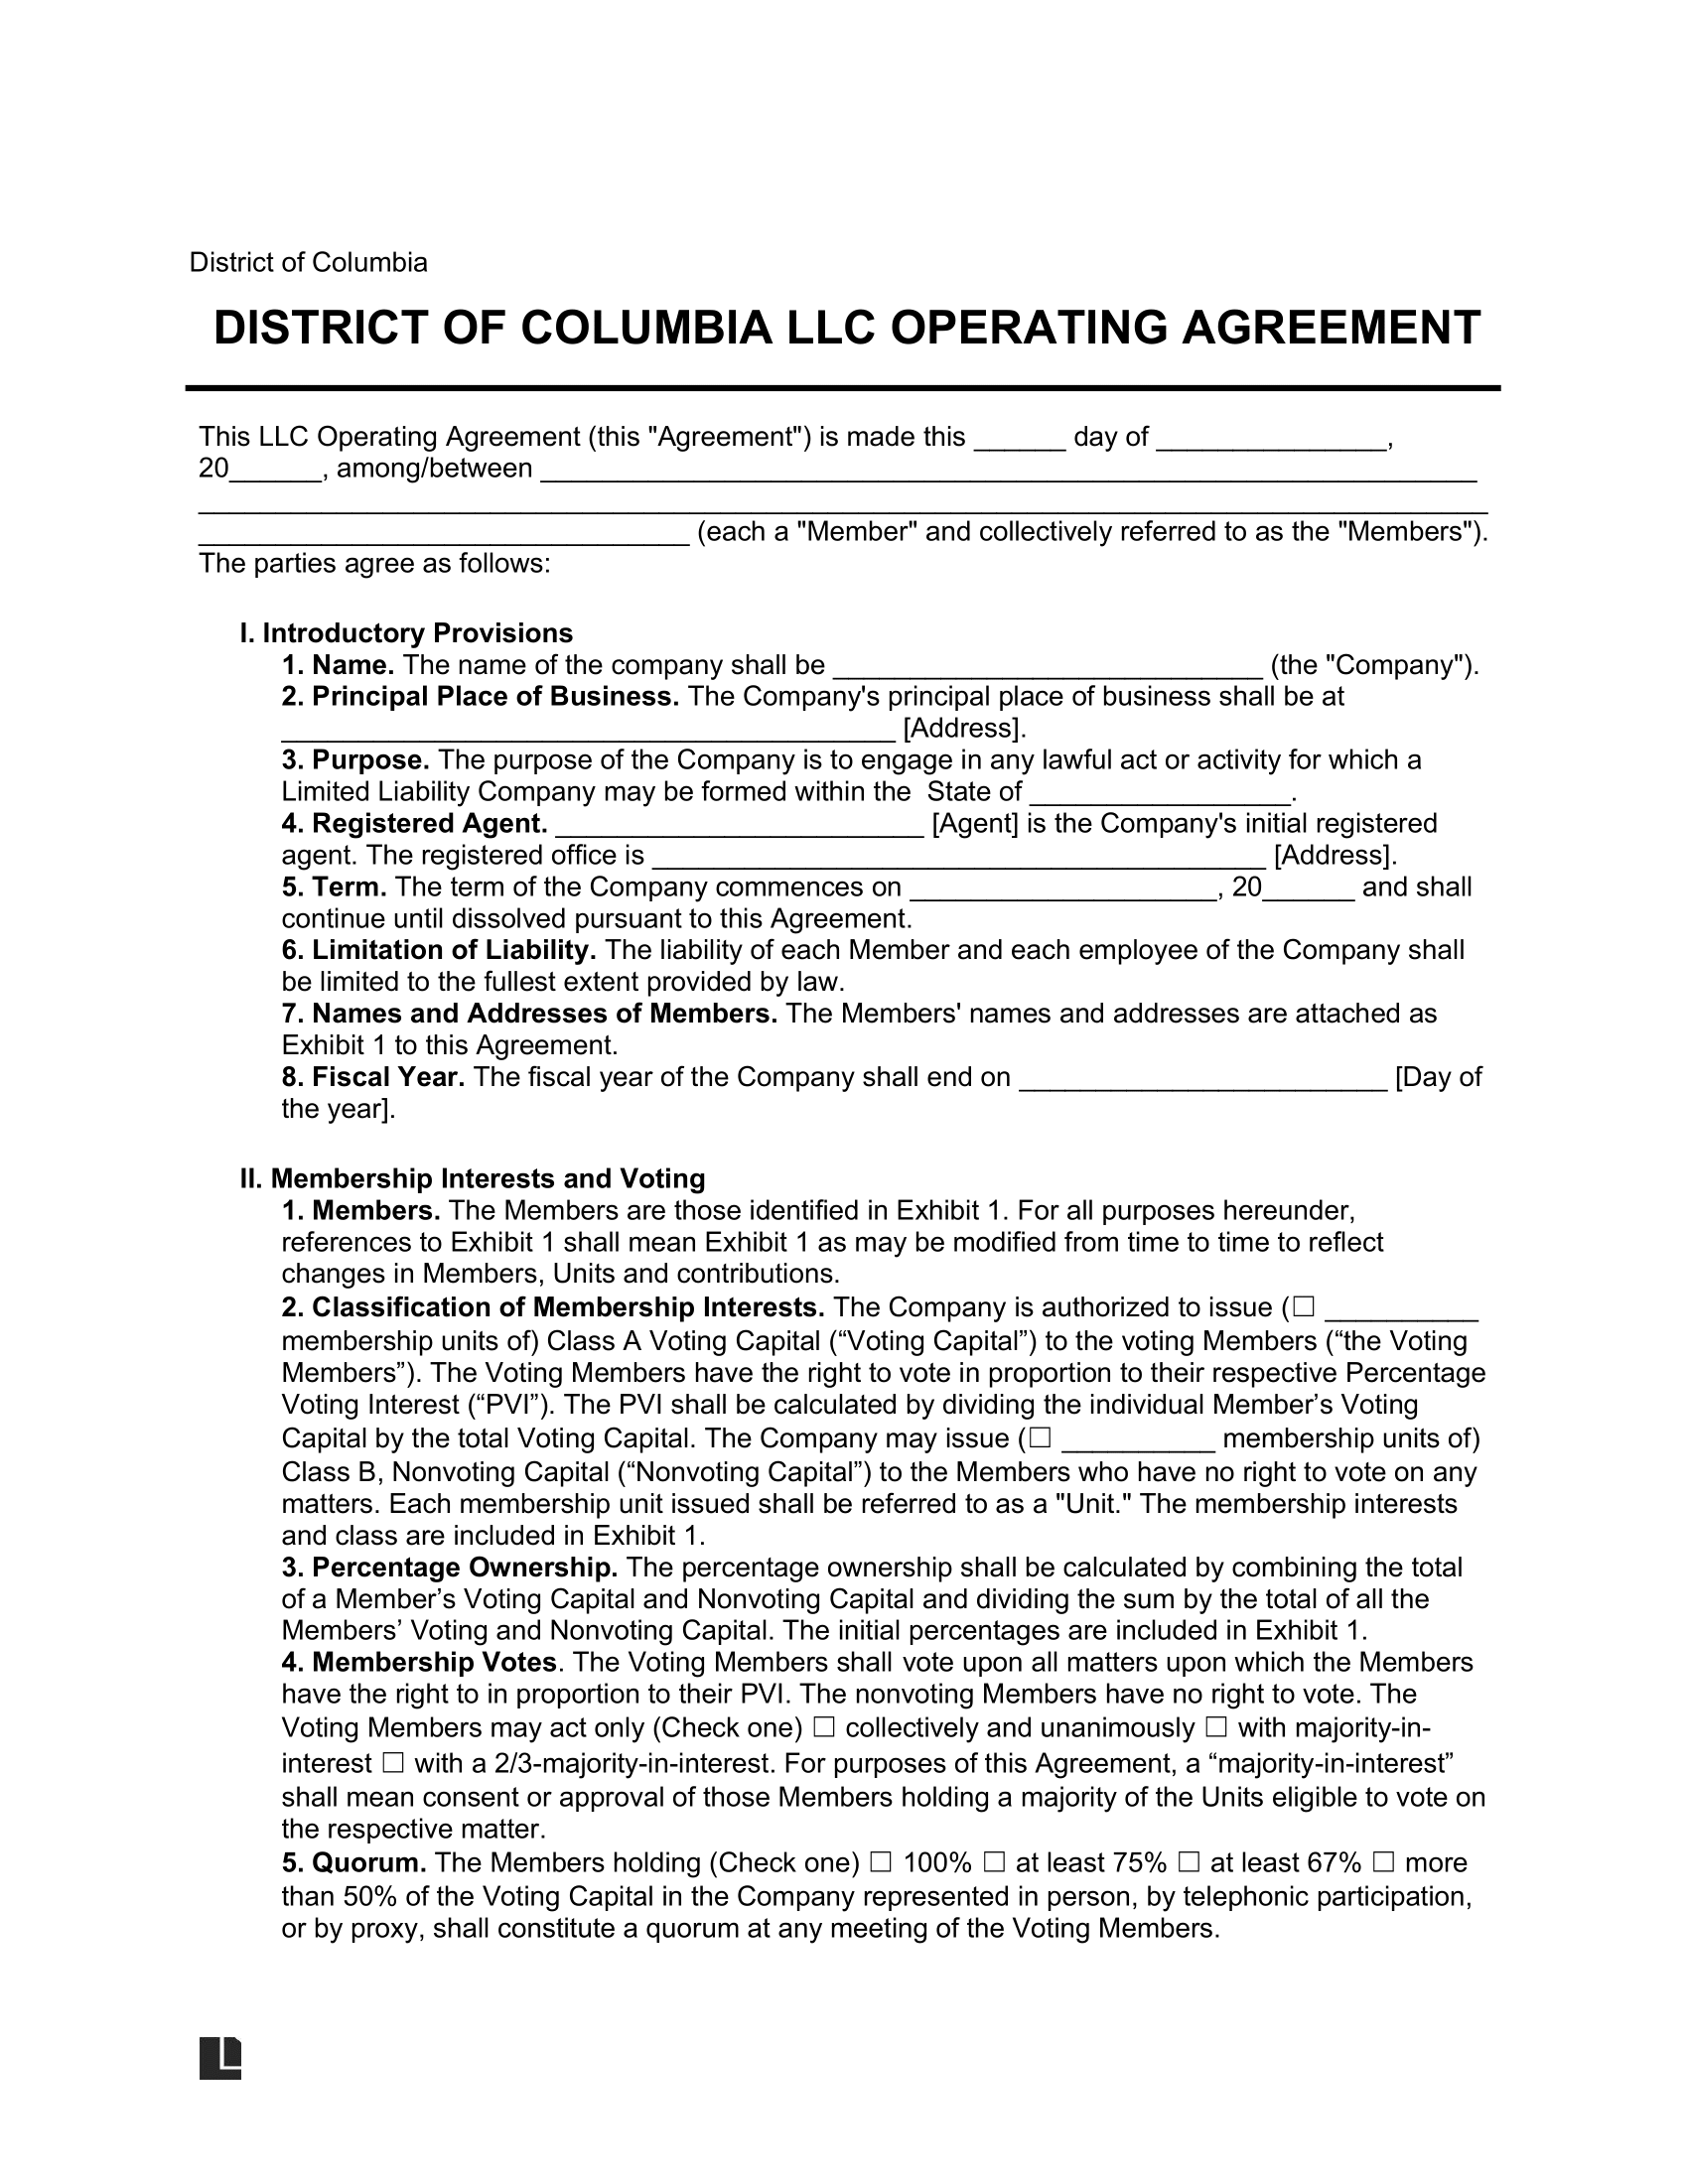 Washington, DC LLC Operating Agreement Template